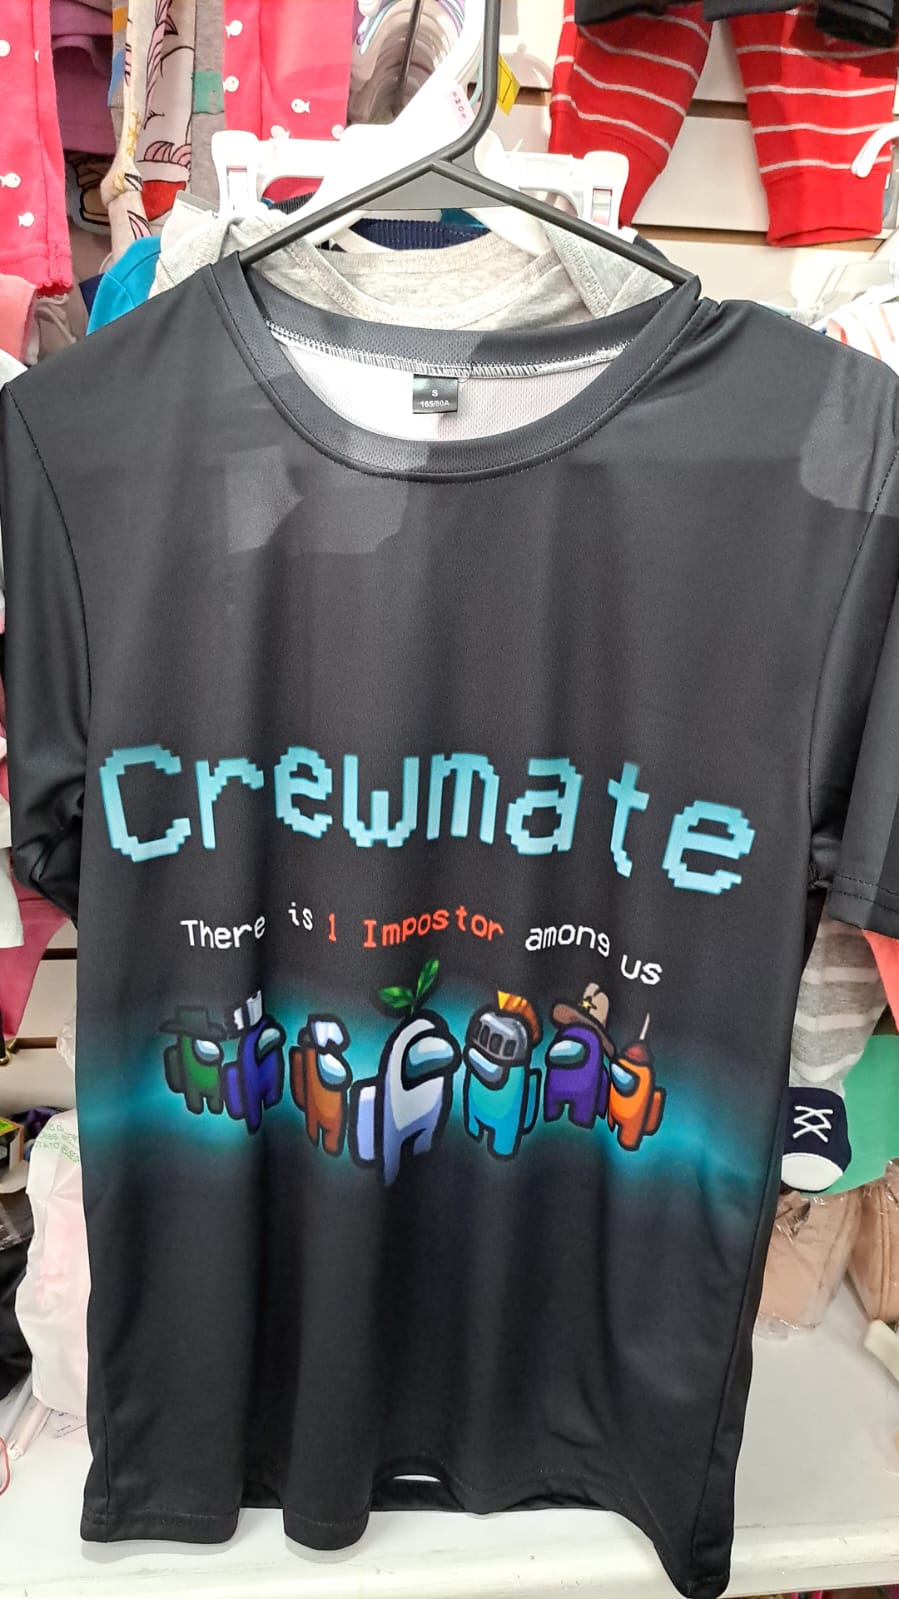 Sale Crewmate Tshirt